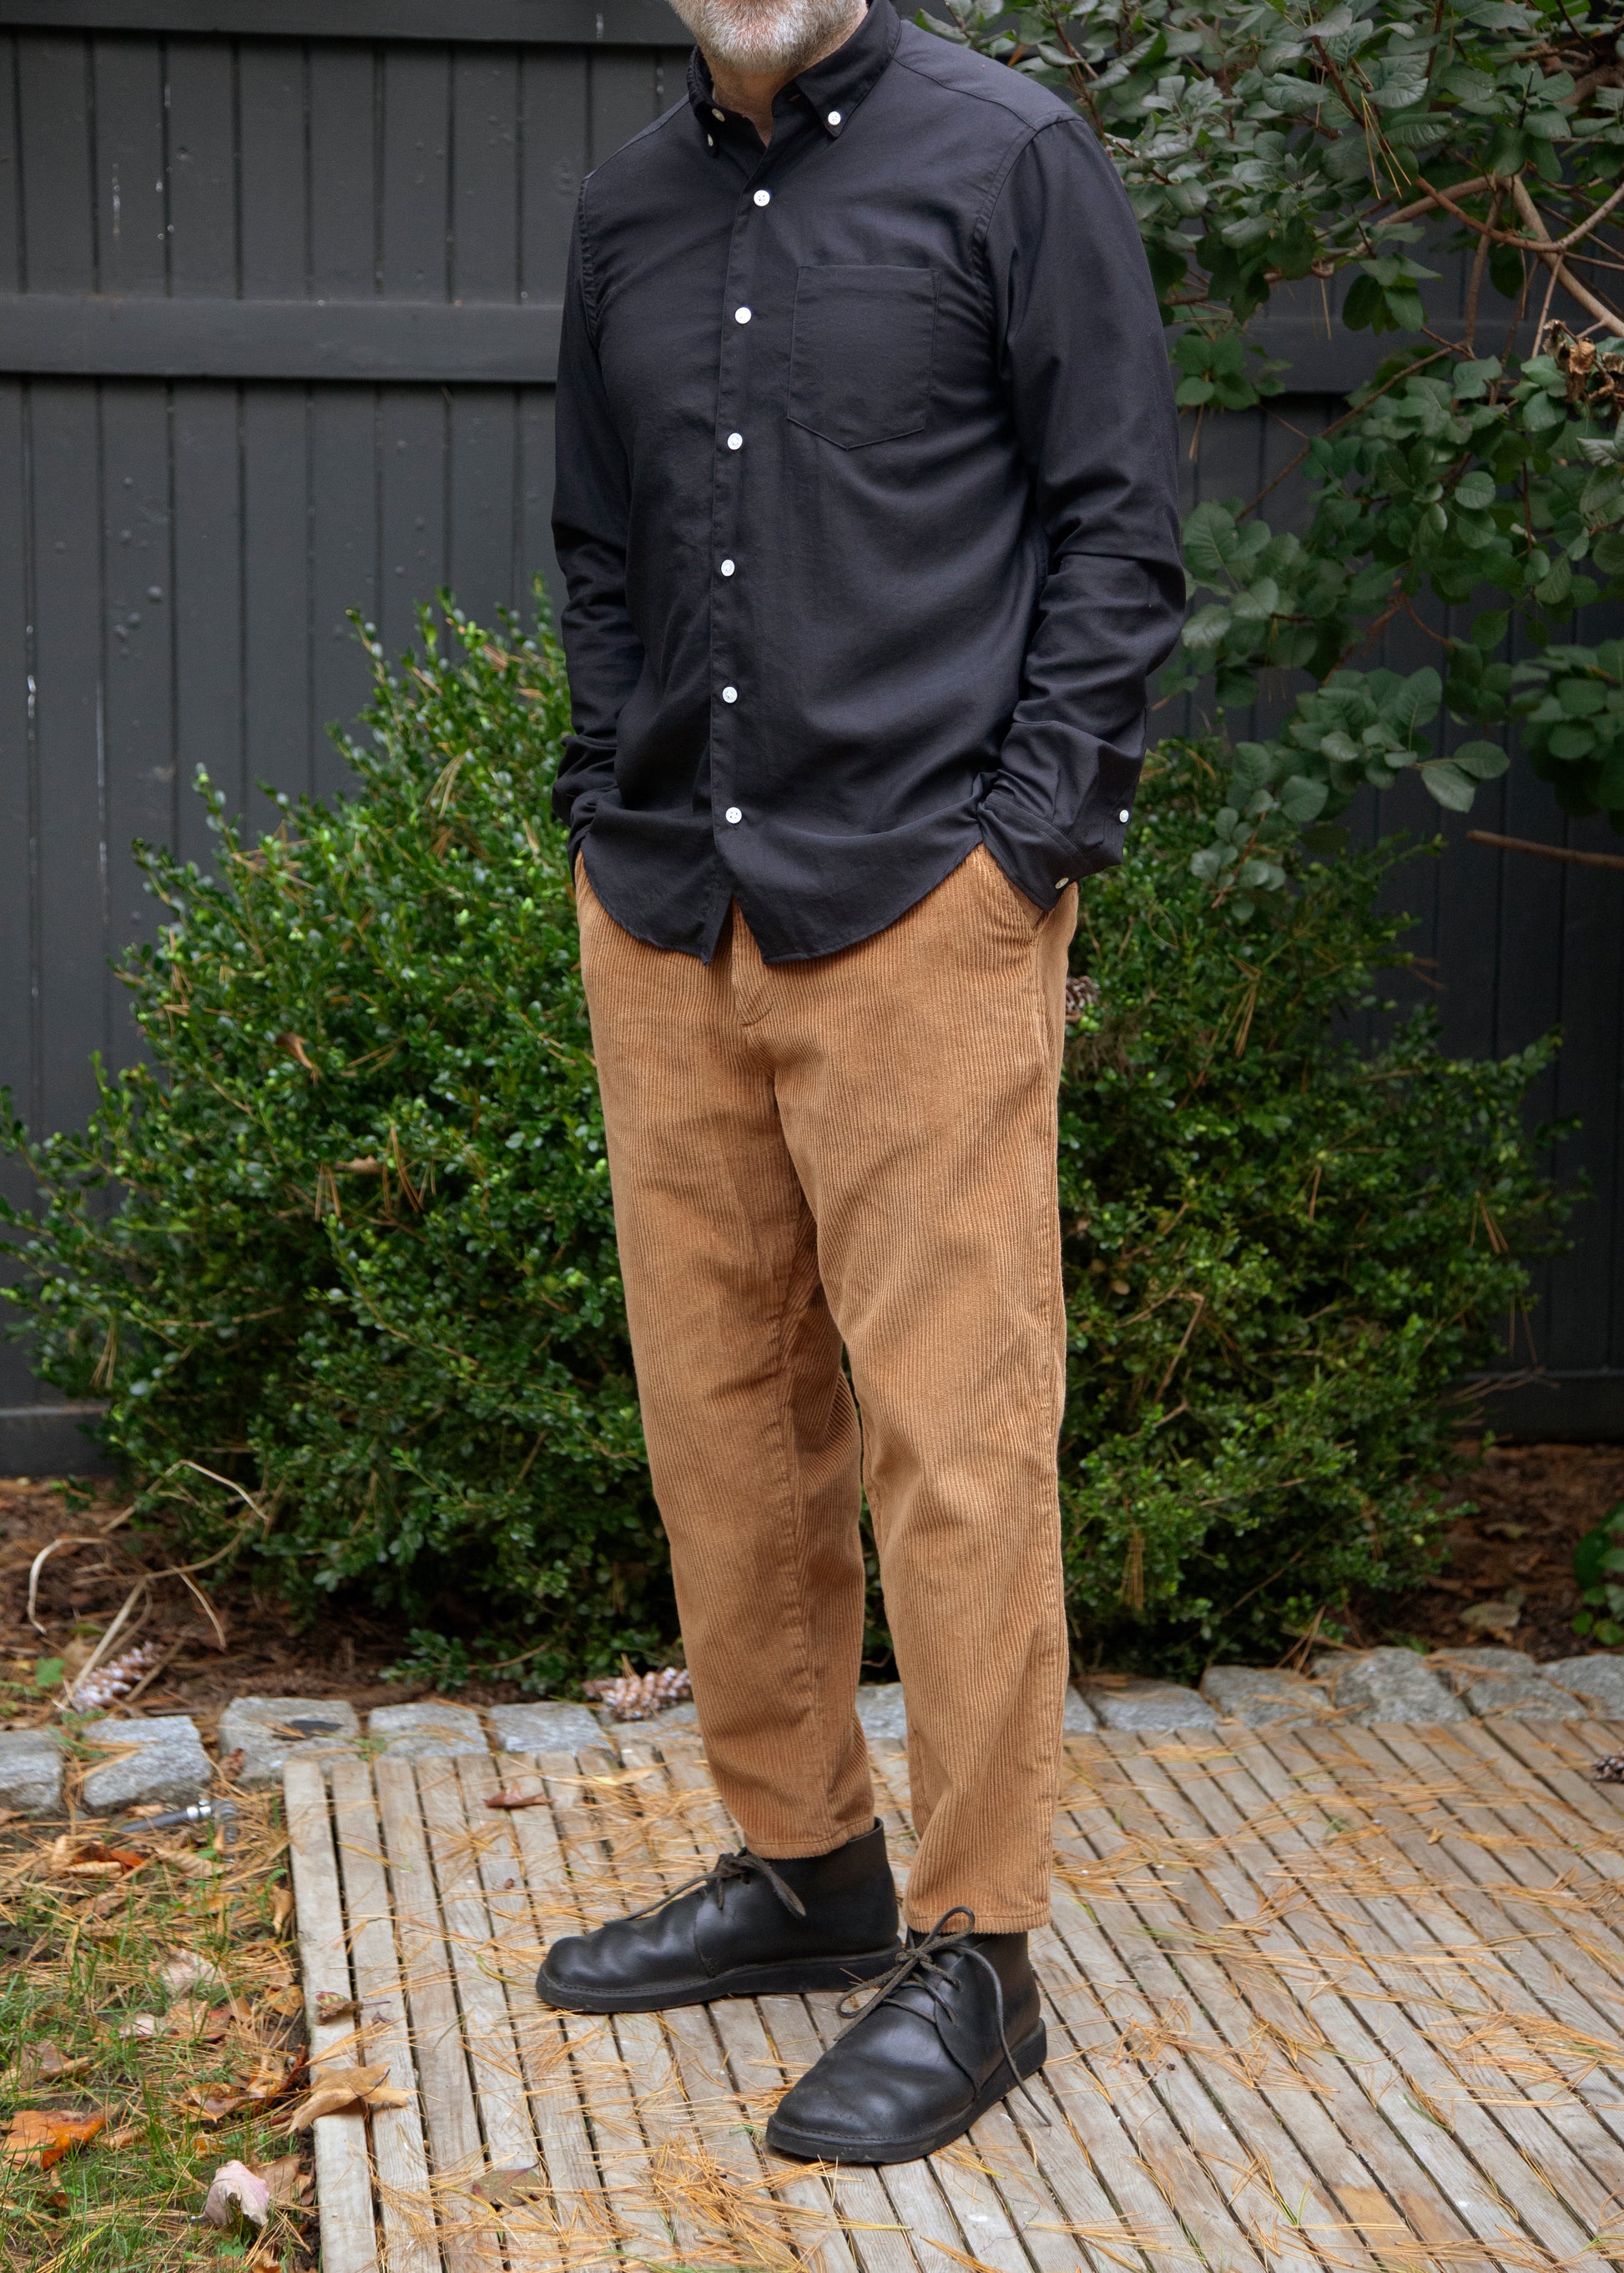 Model standing wearing single needle shirt in black nylon and brown corduroy pants